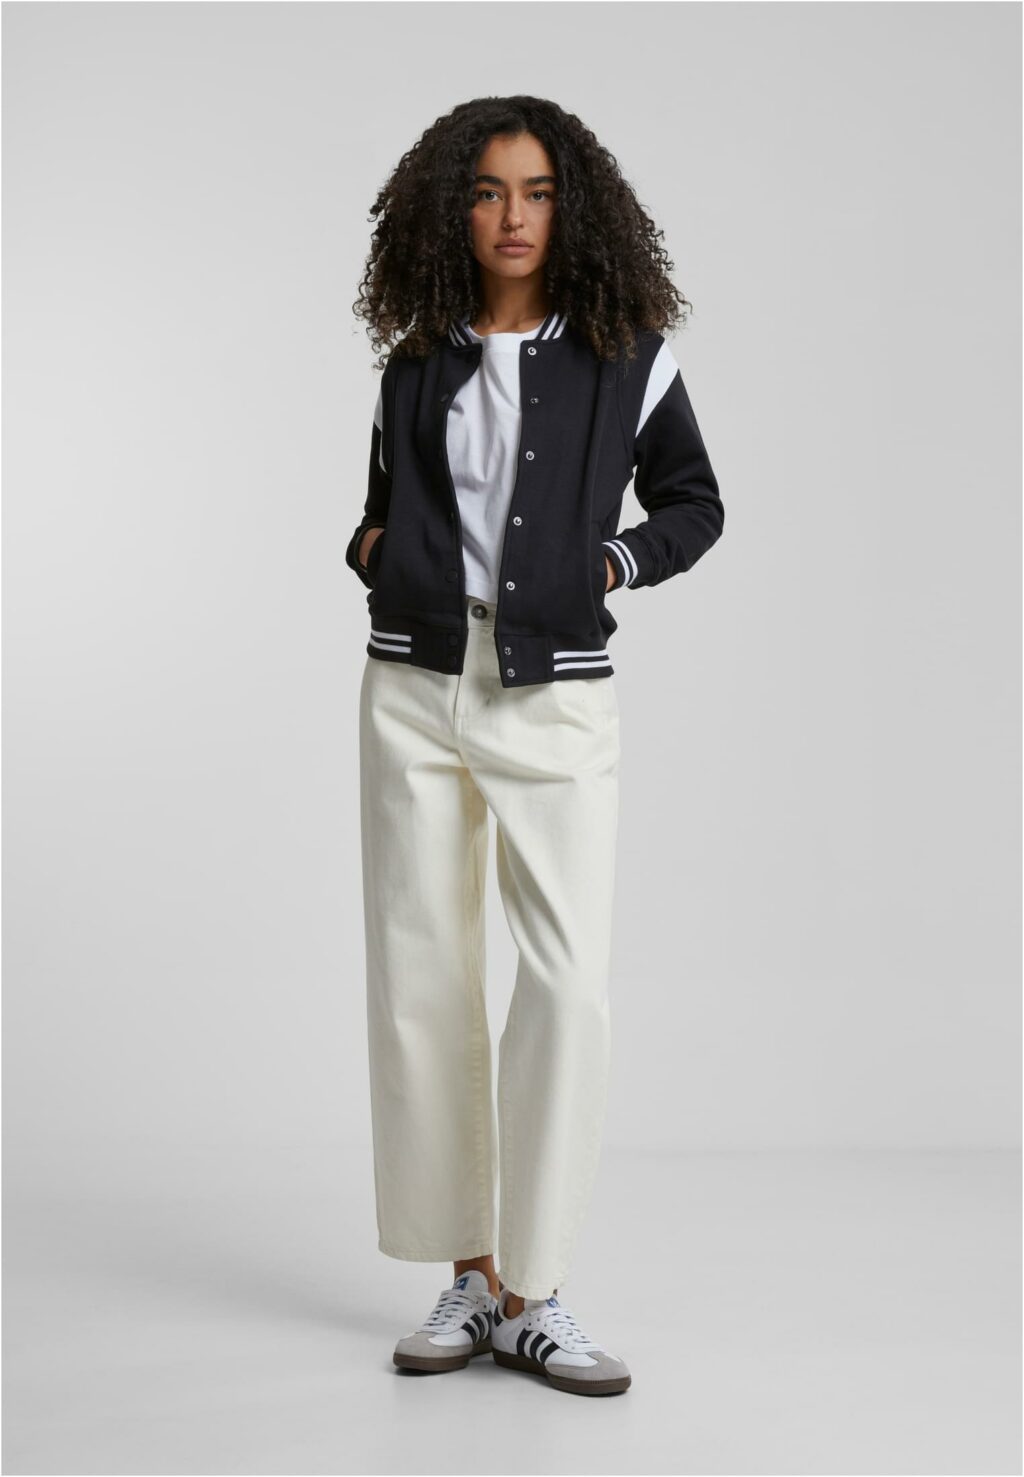 Urban Classics Ladies Inset College Sweat Jacket blk/wht TB2618